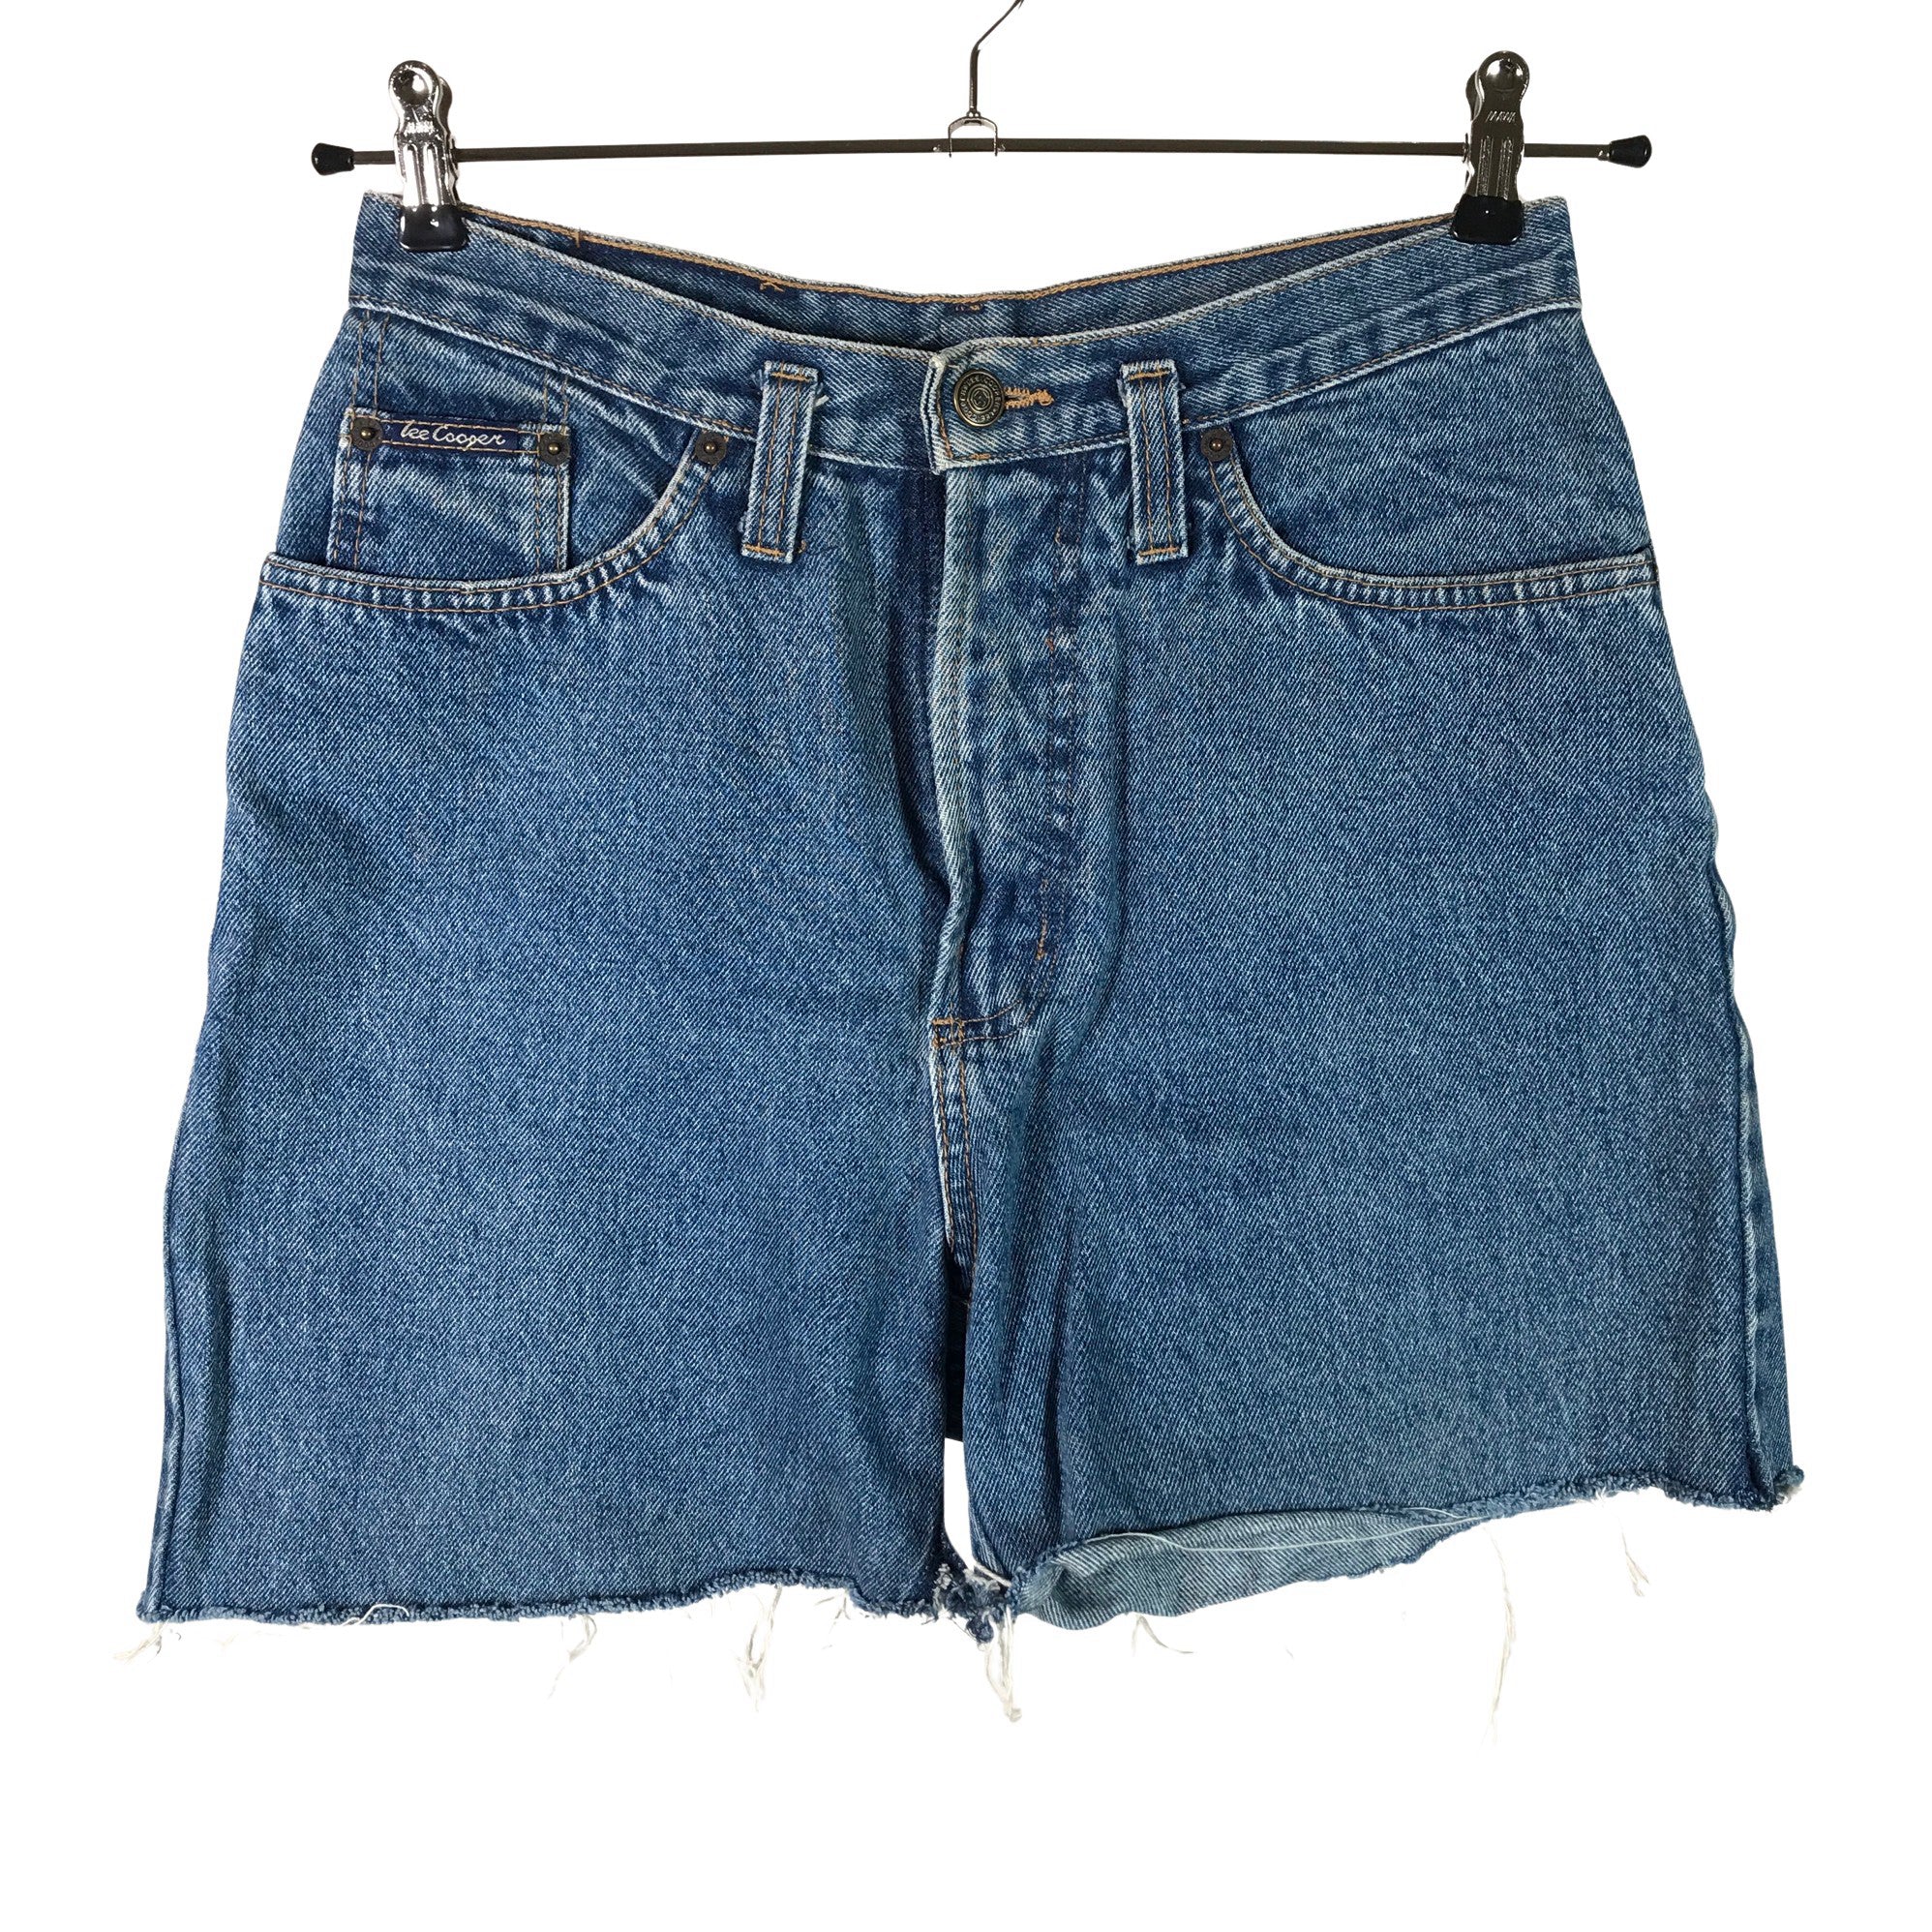 Buy Lee Cooper Regular Fit Denim Shorts Online for Girls | Centrepoint Qatar